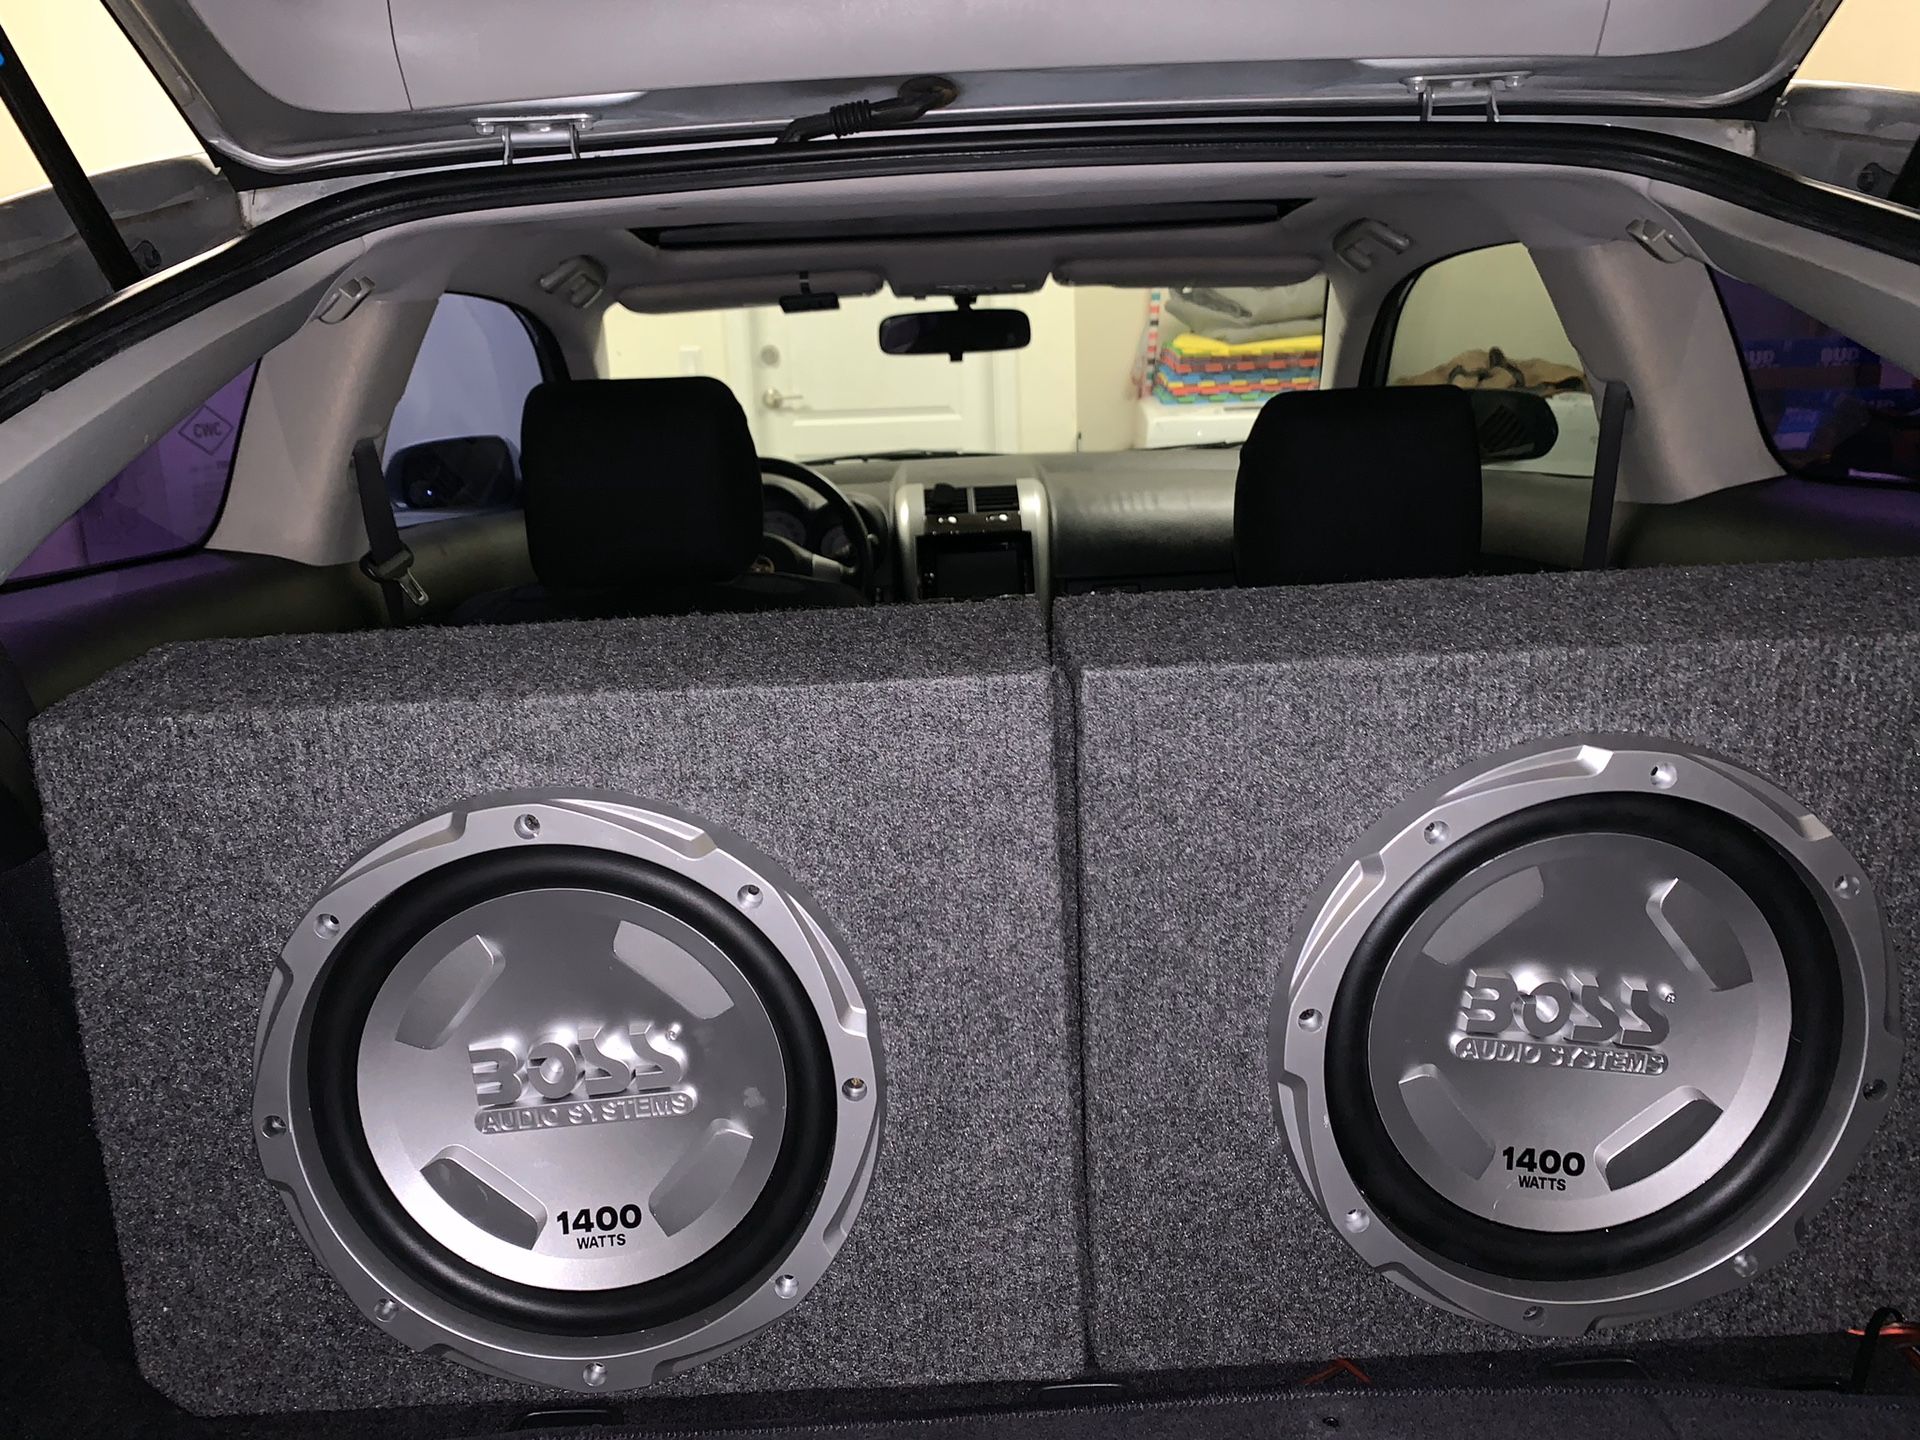 Boss 1400 watts subwoofers / car speakers